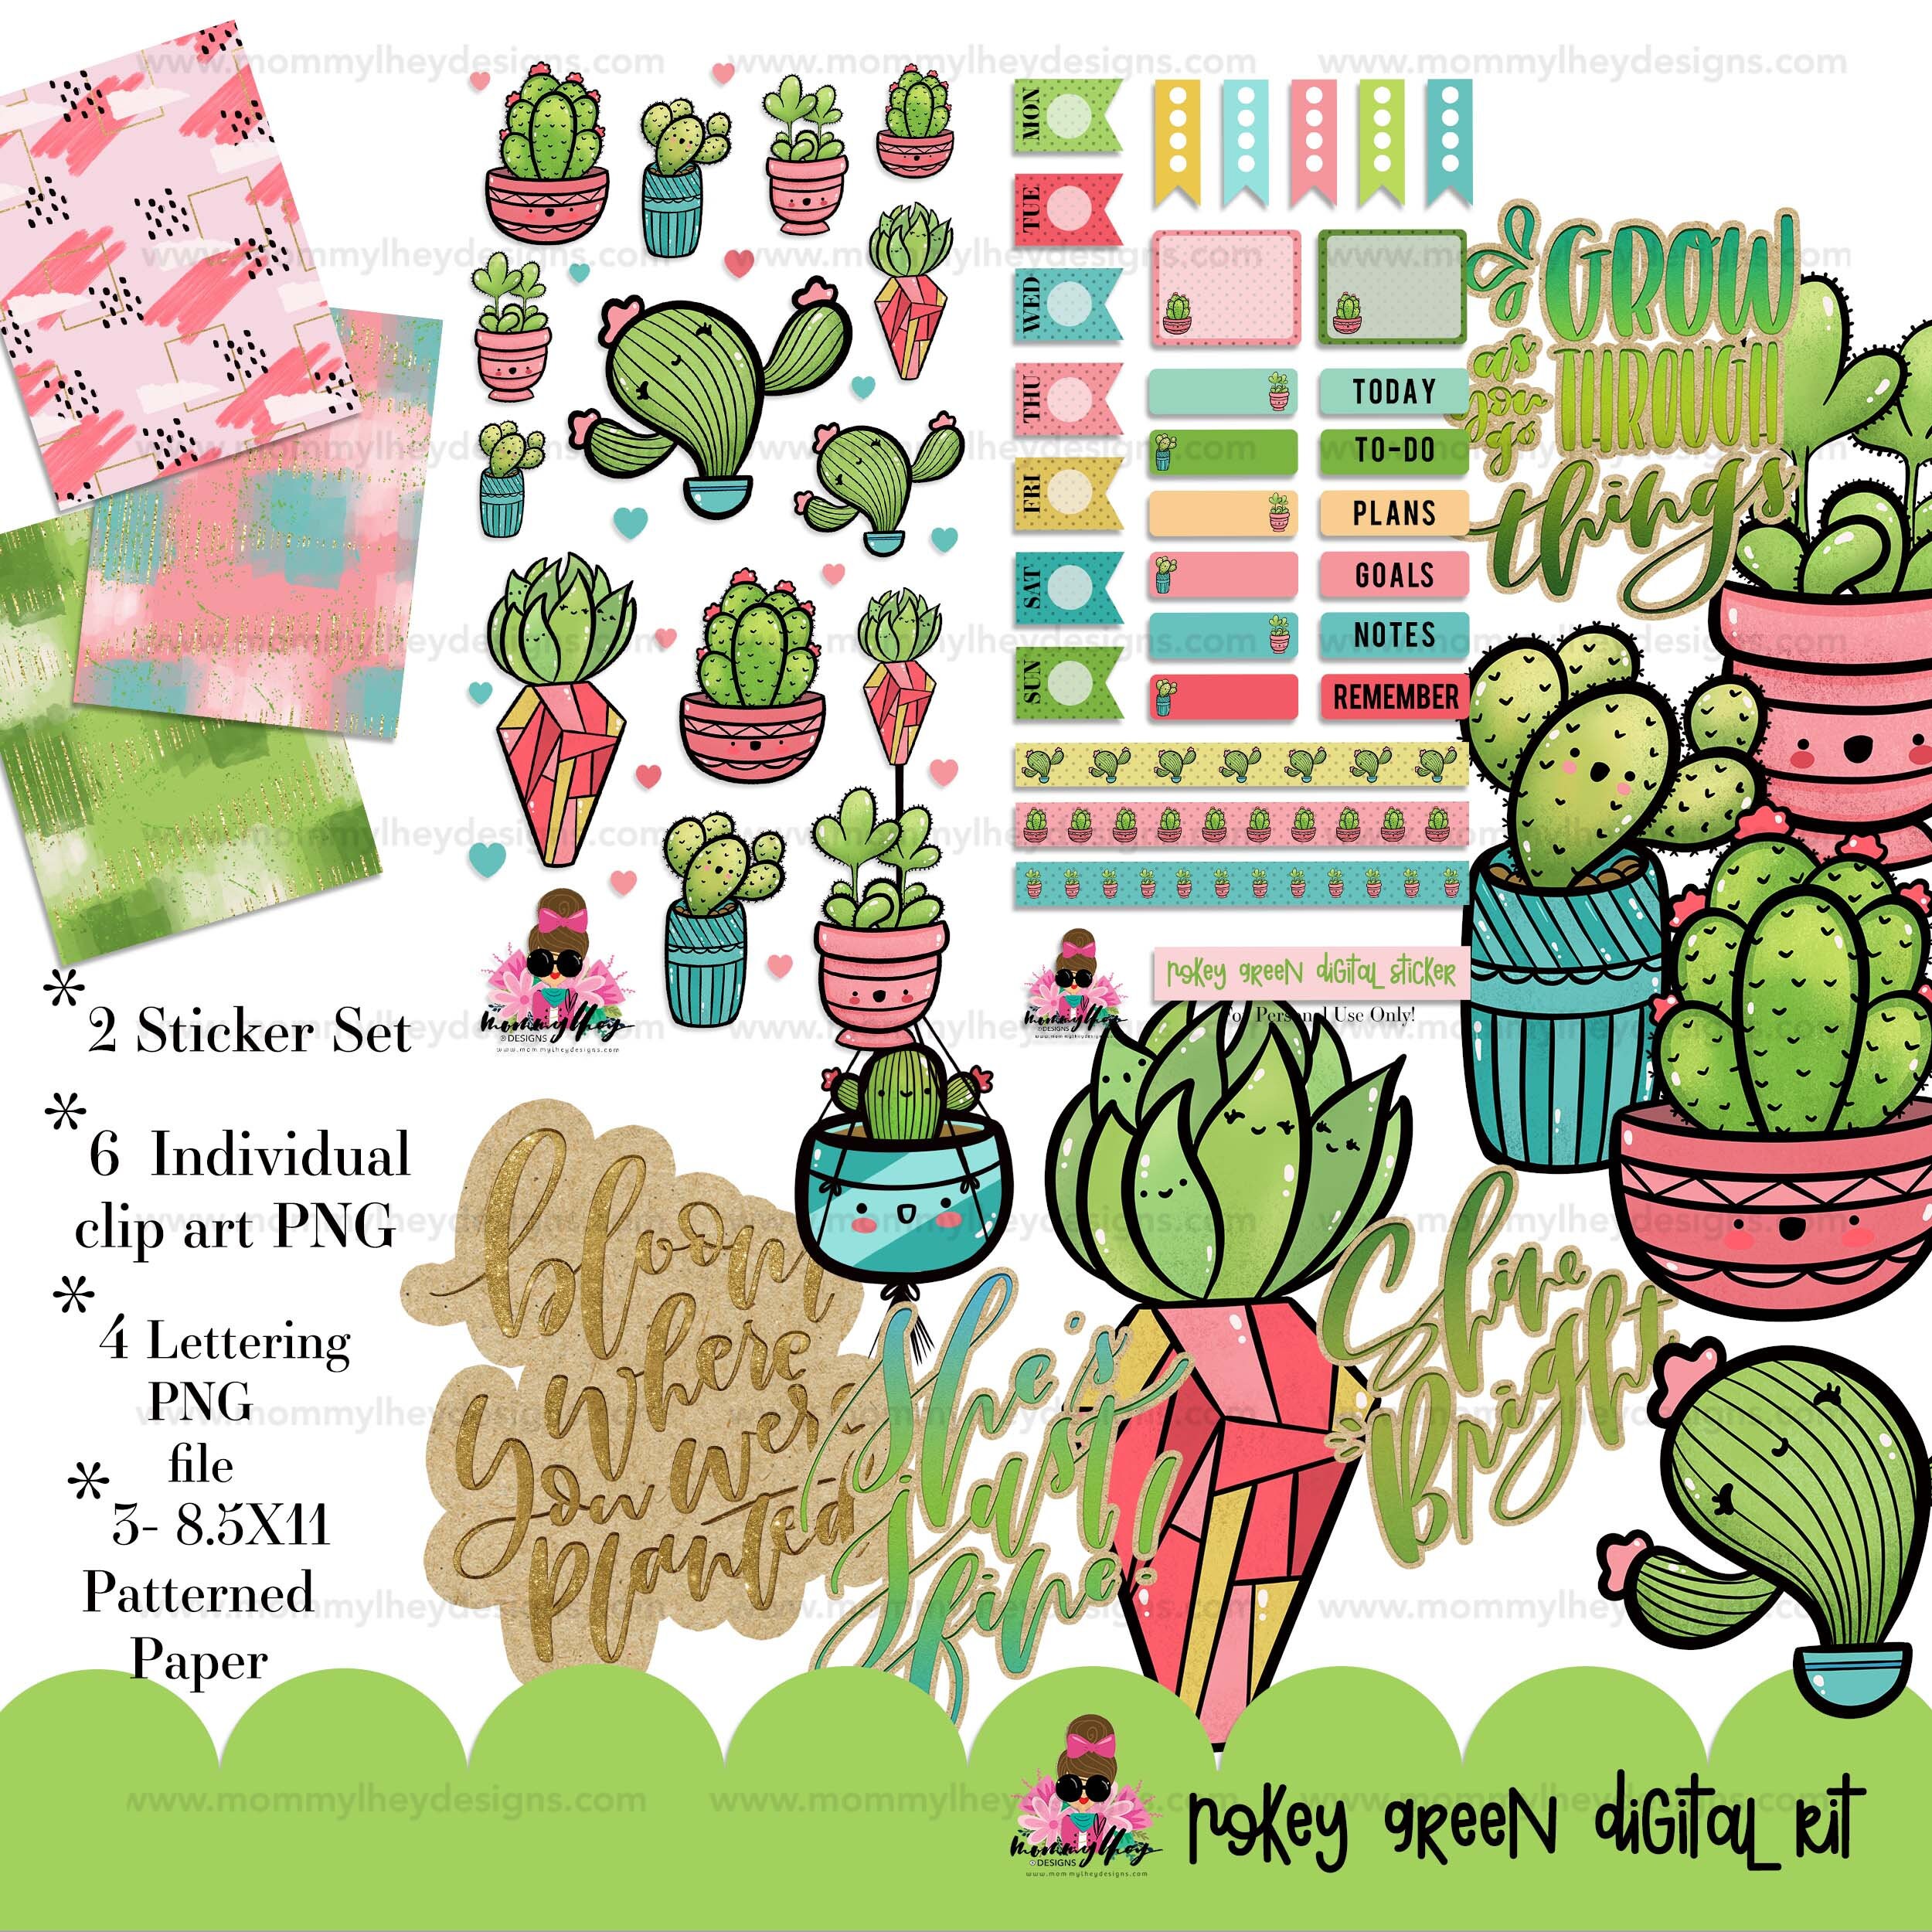 Pinky Cute Sticker Set — MOMMY LHEY DESIGNS